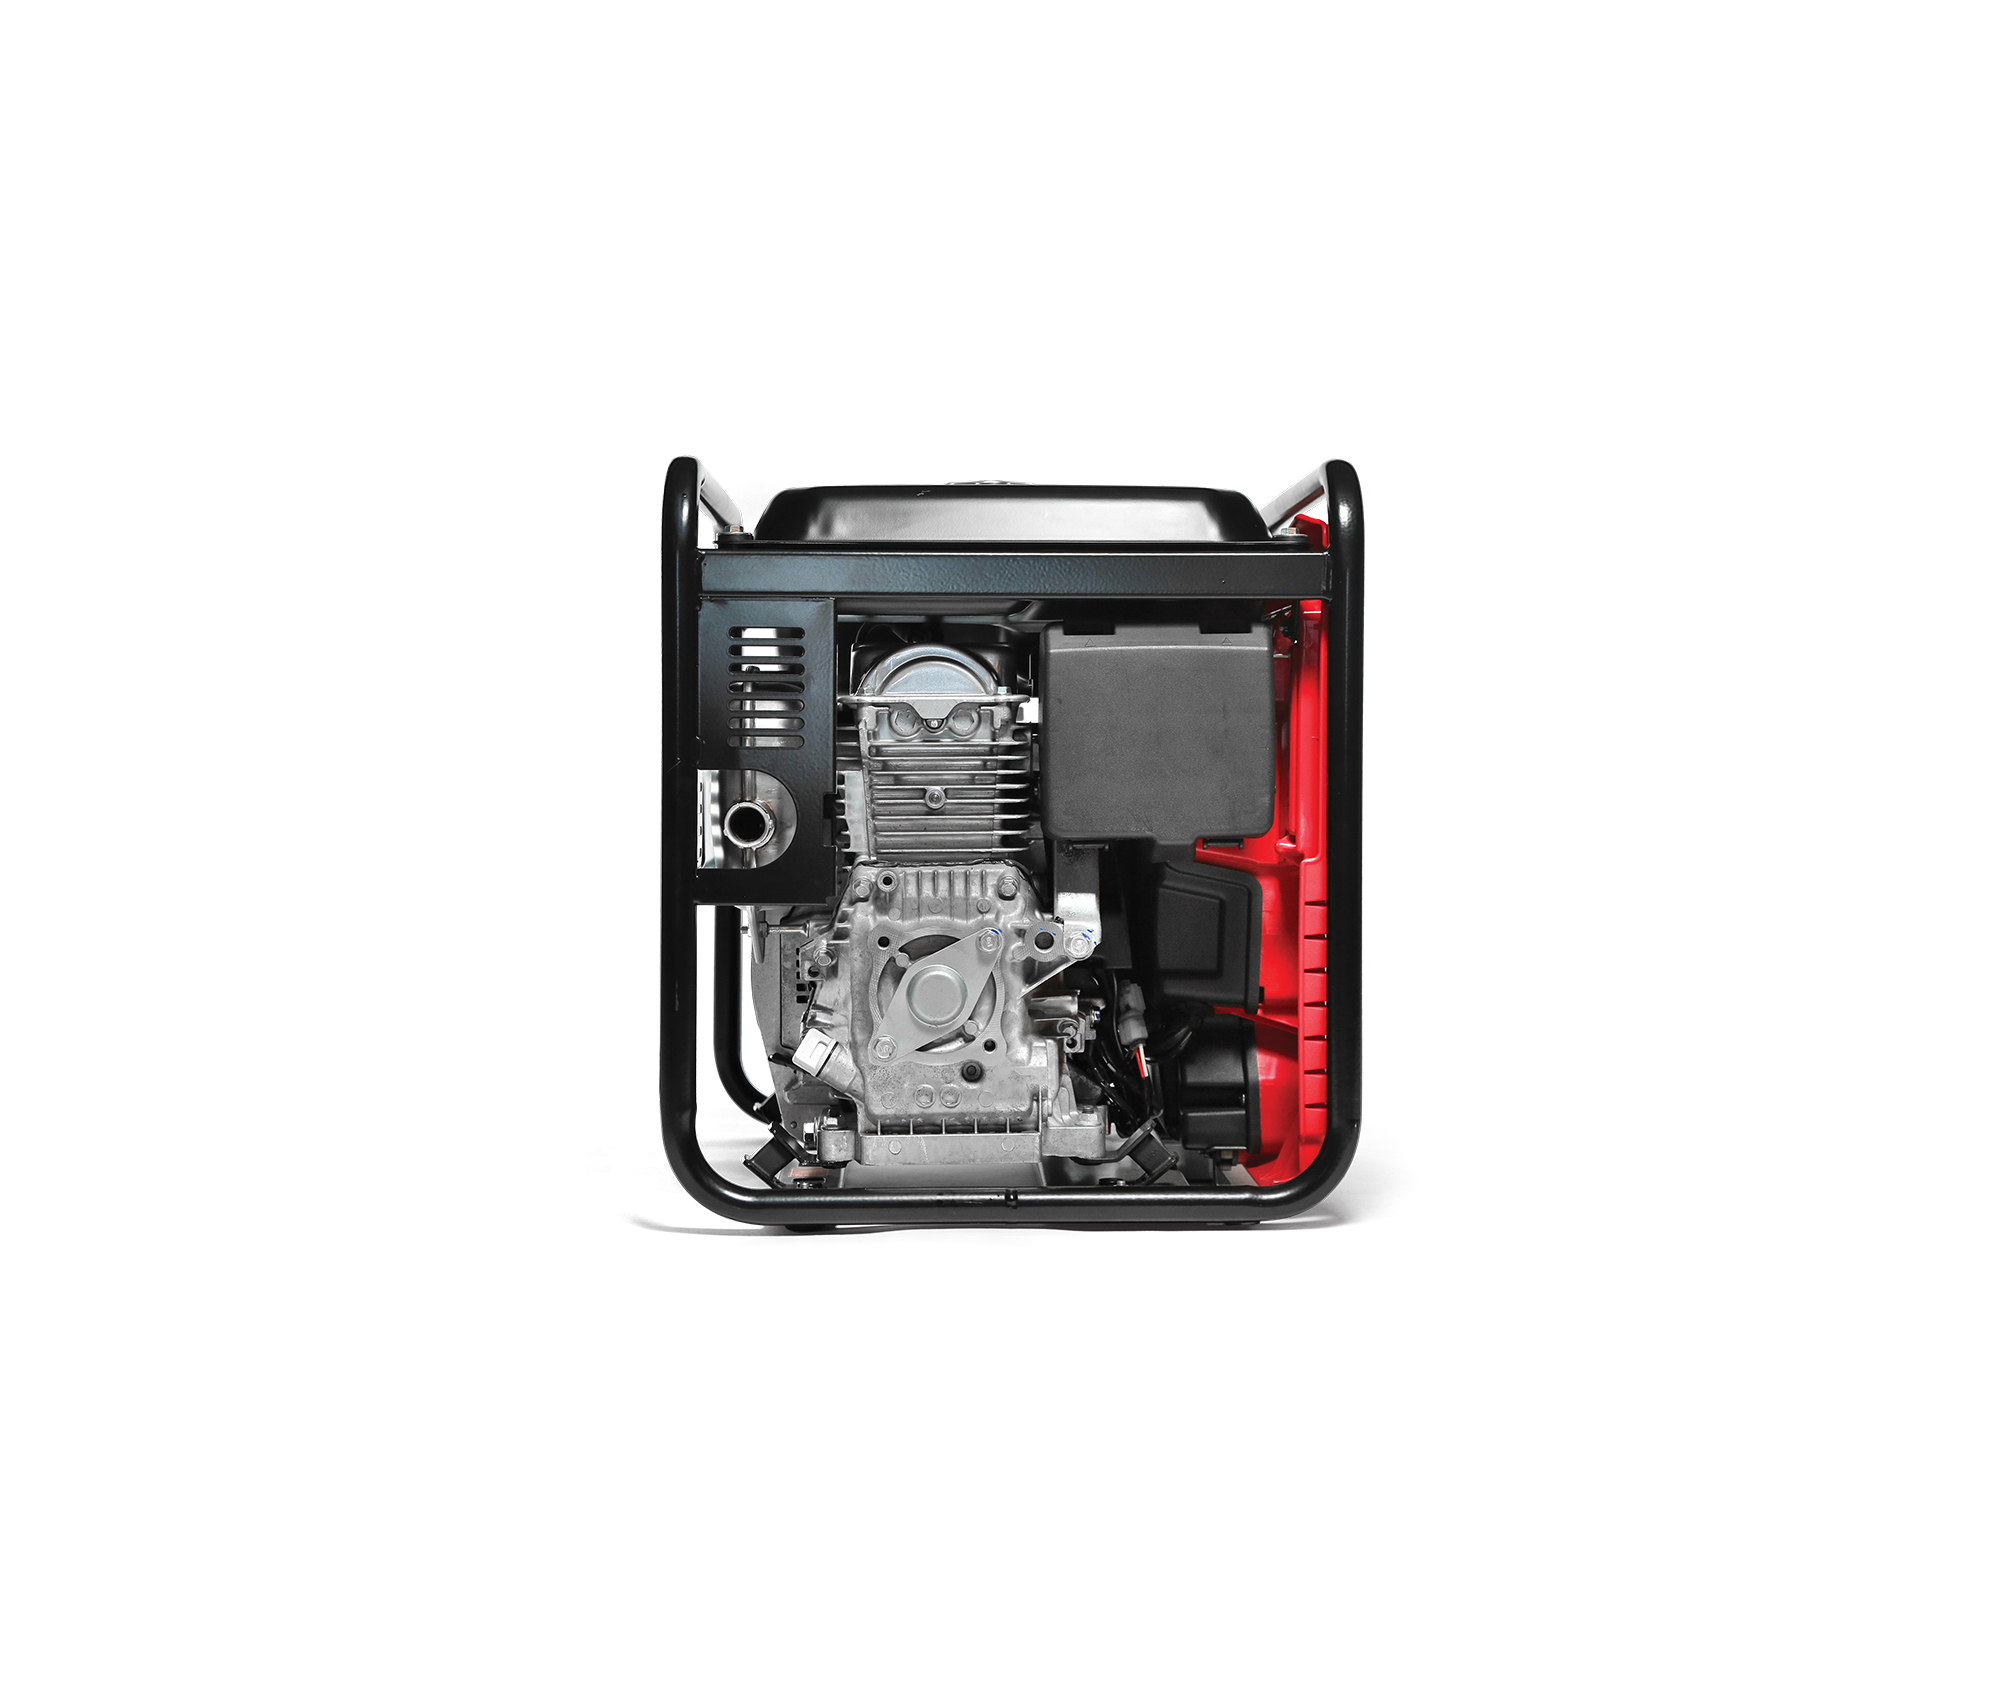 Image of the Inverter 2800i generator